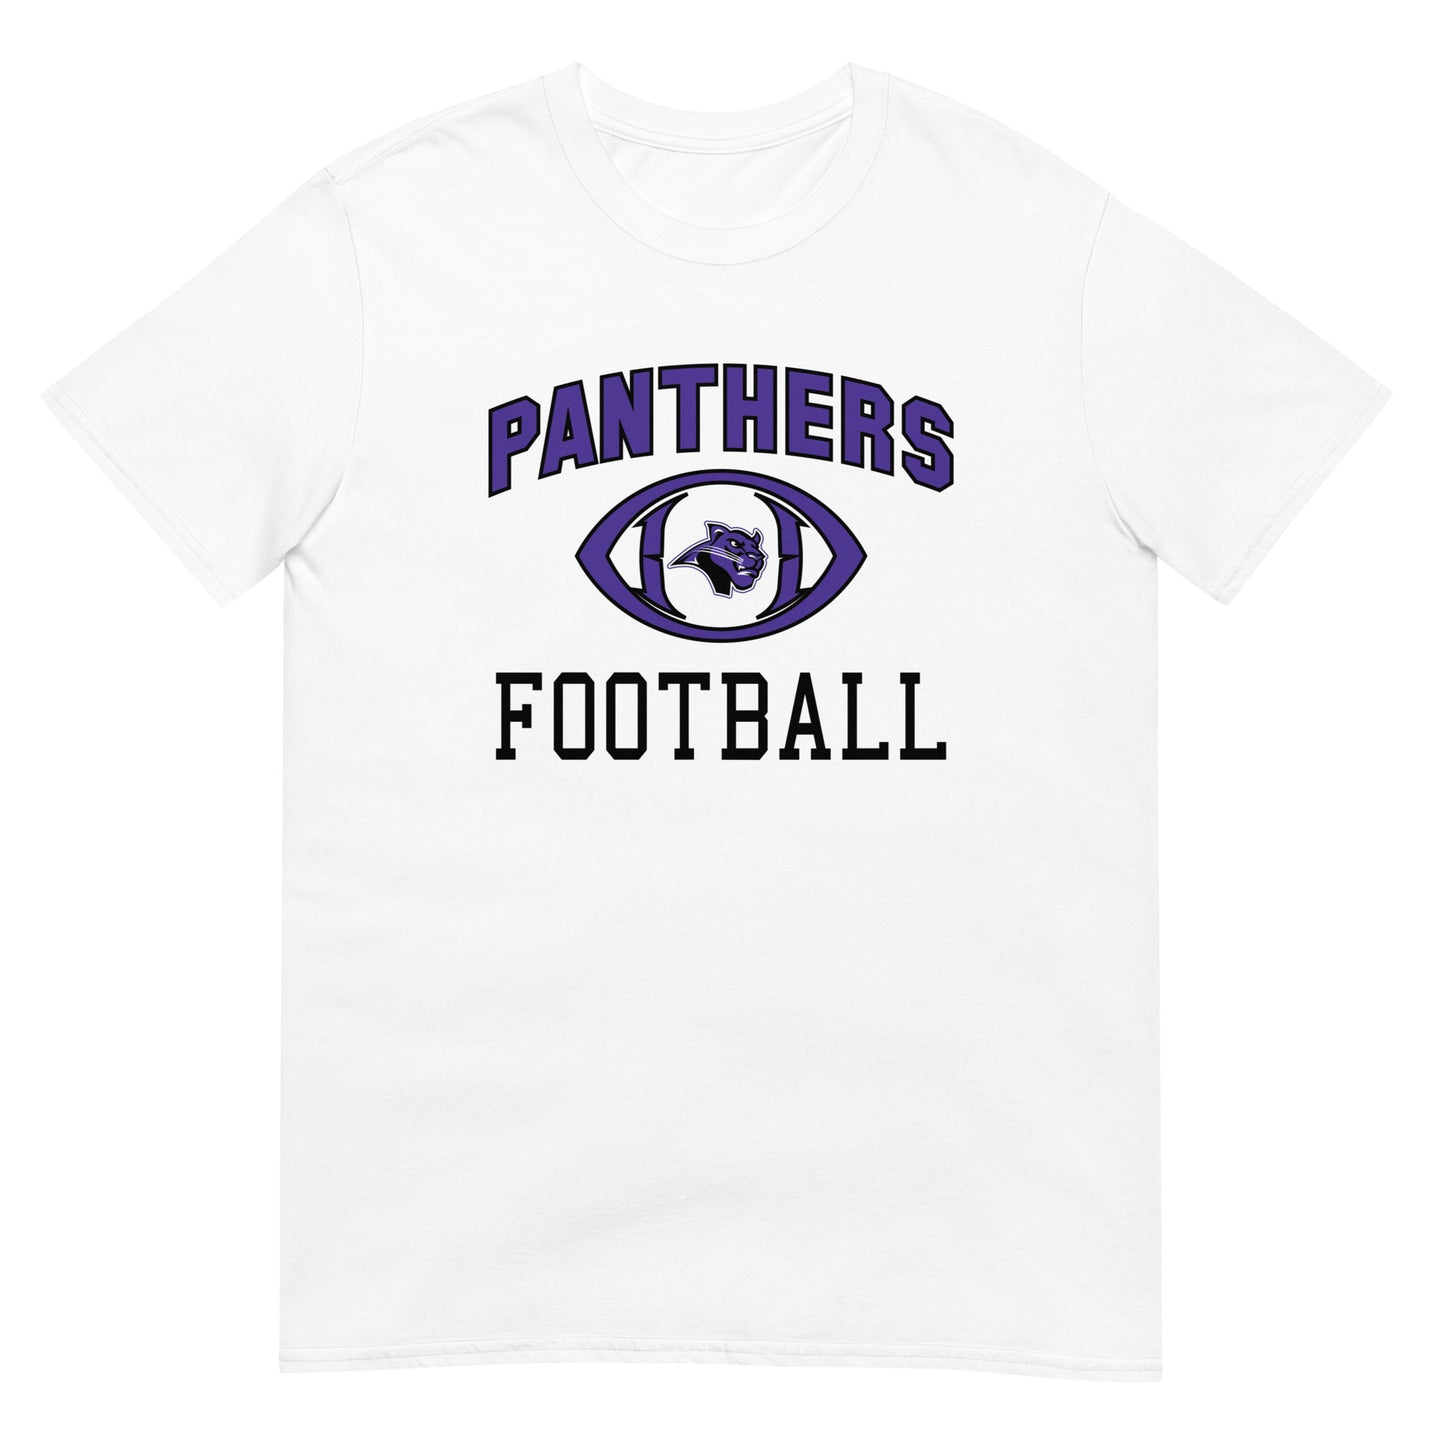 Panthers Football Short-Sleeve Unisex T-Shirt